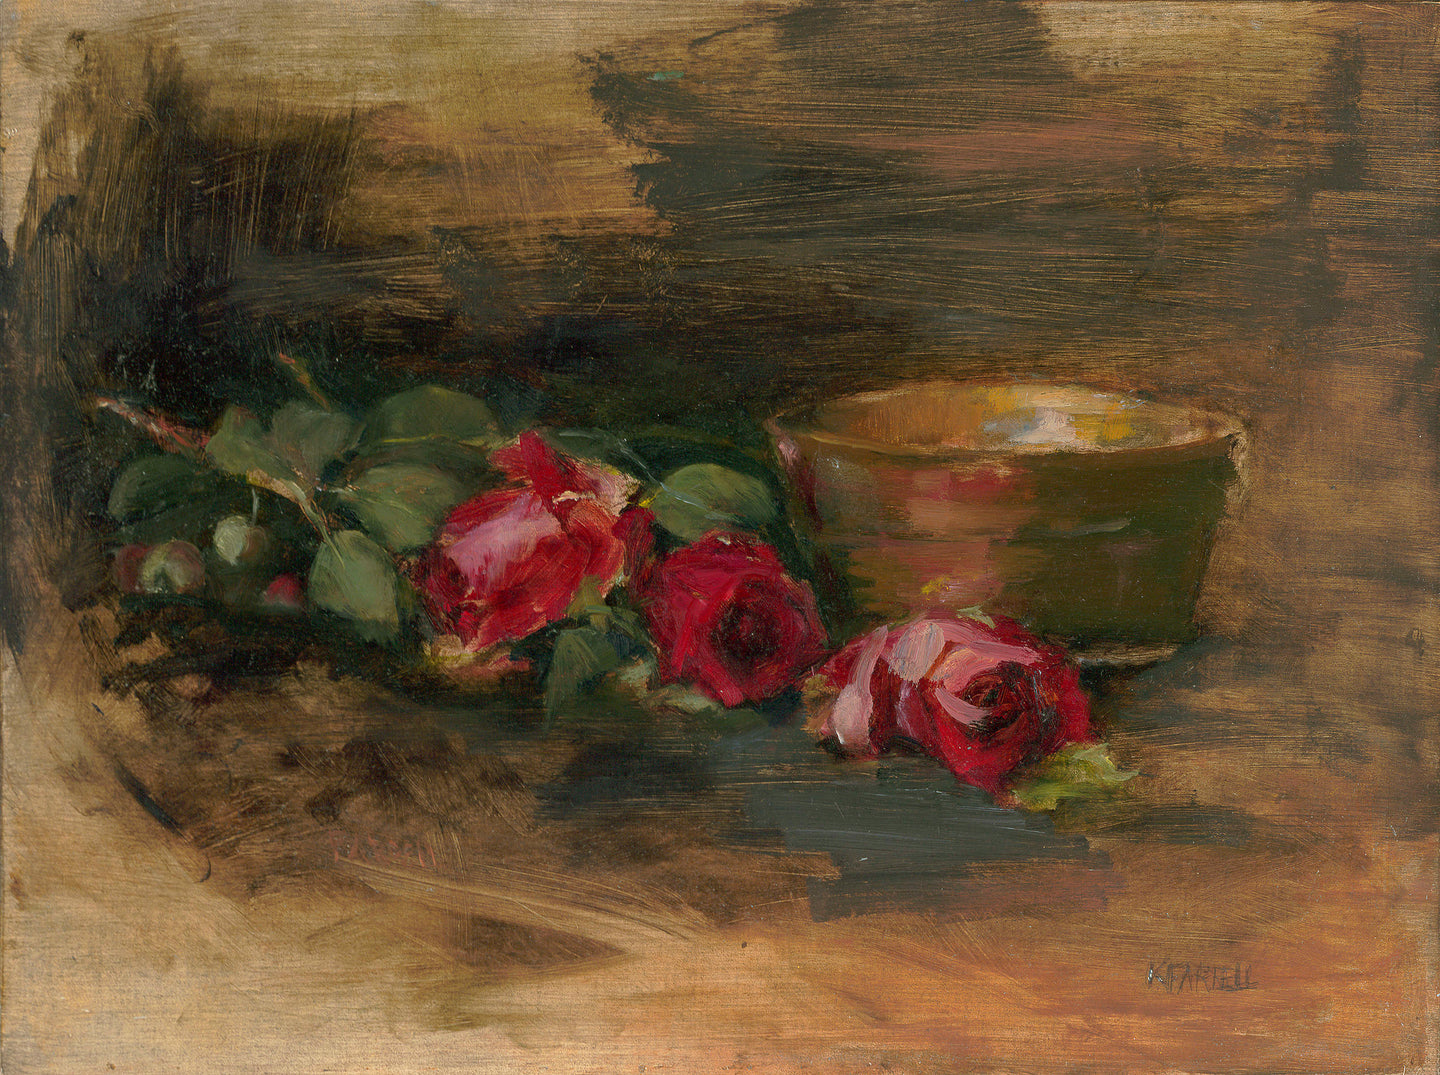 Three Roses by Karolyn Farrell